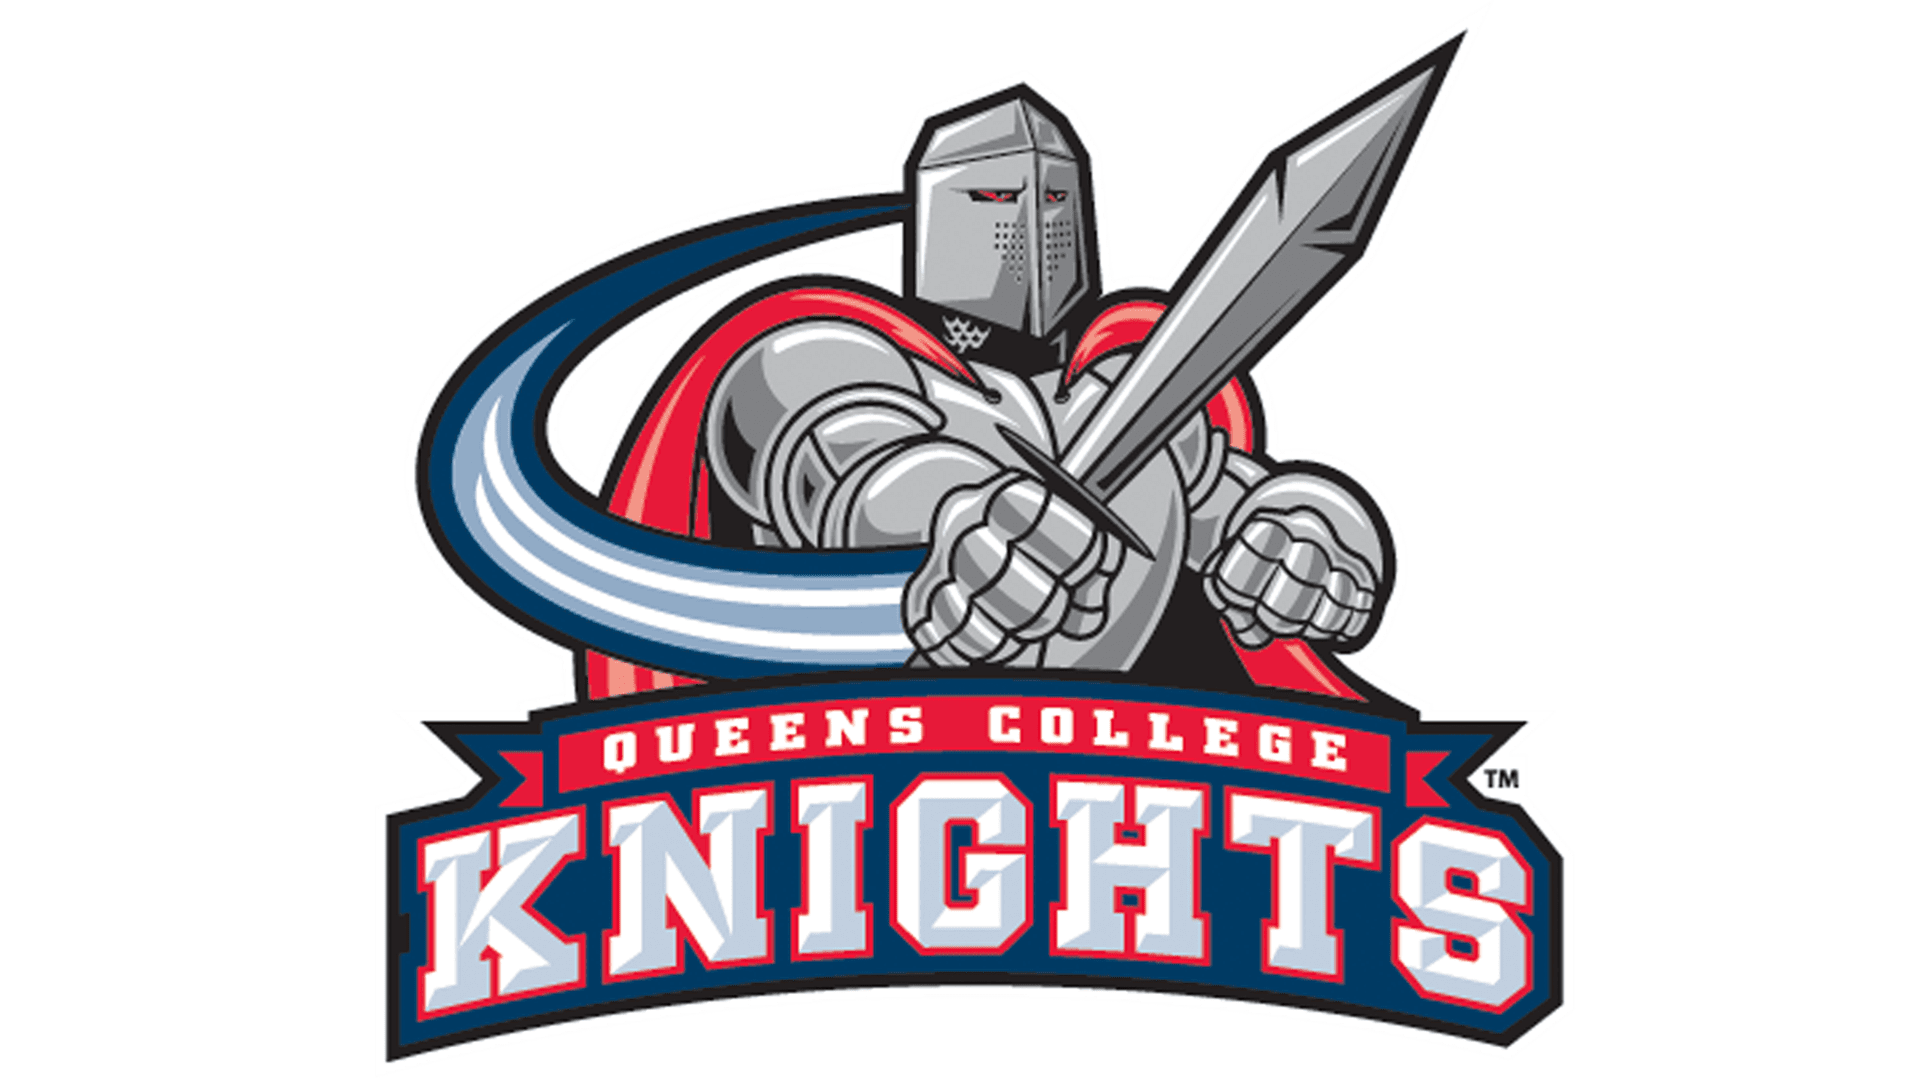 Queens College Knights Athletics